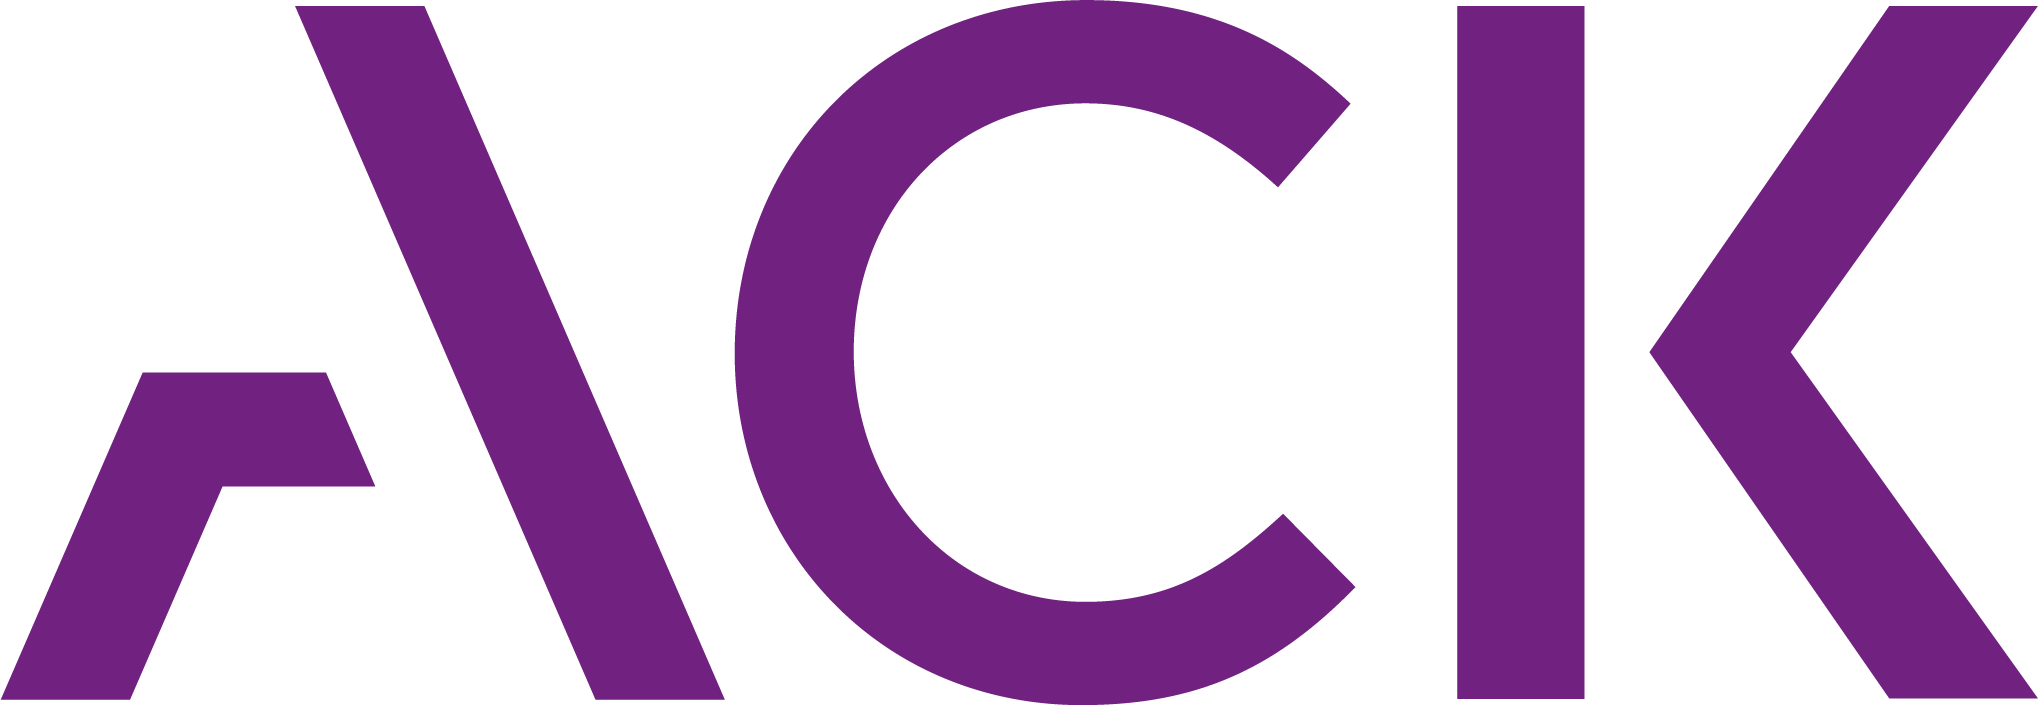 Ack Logo - ACK - Helping Communities Thrive